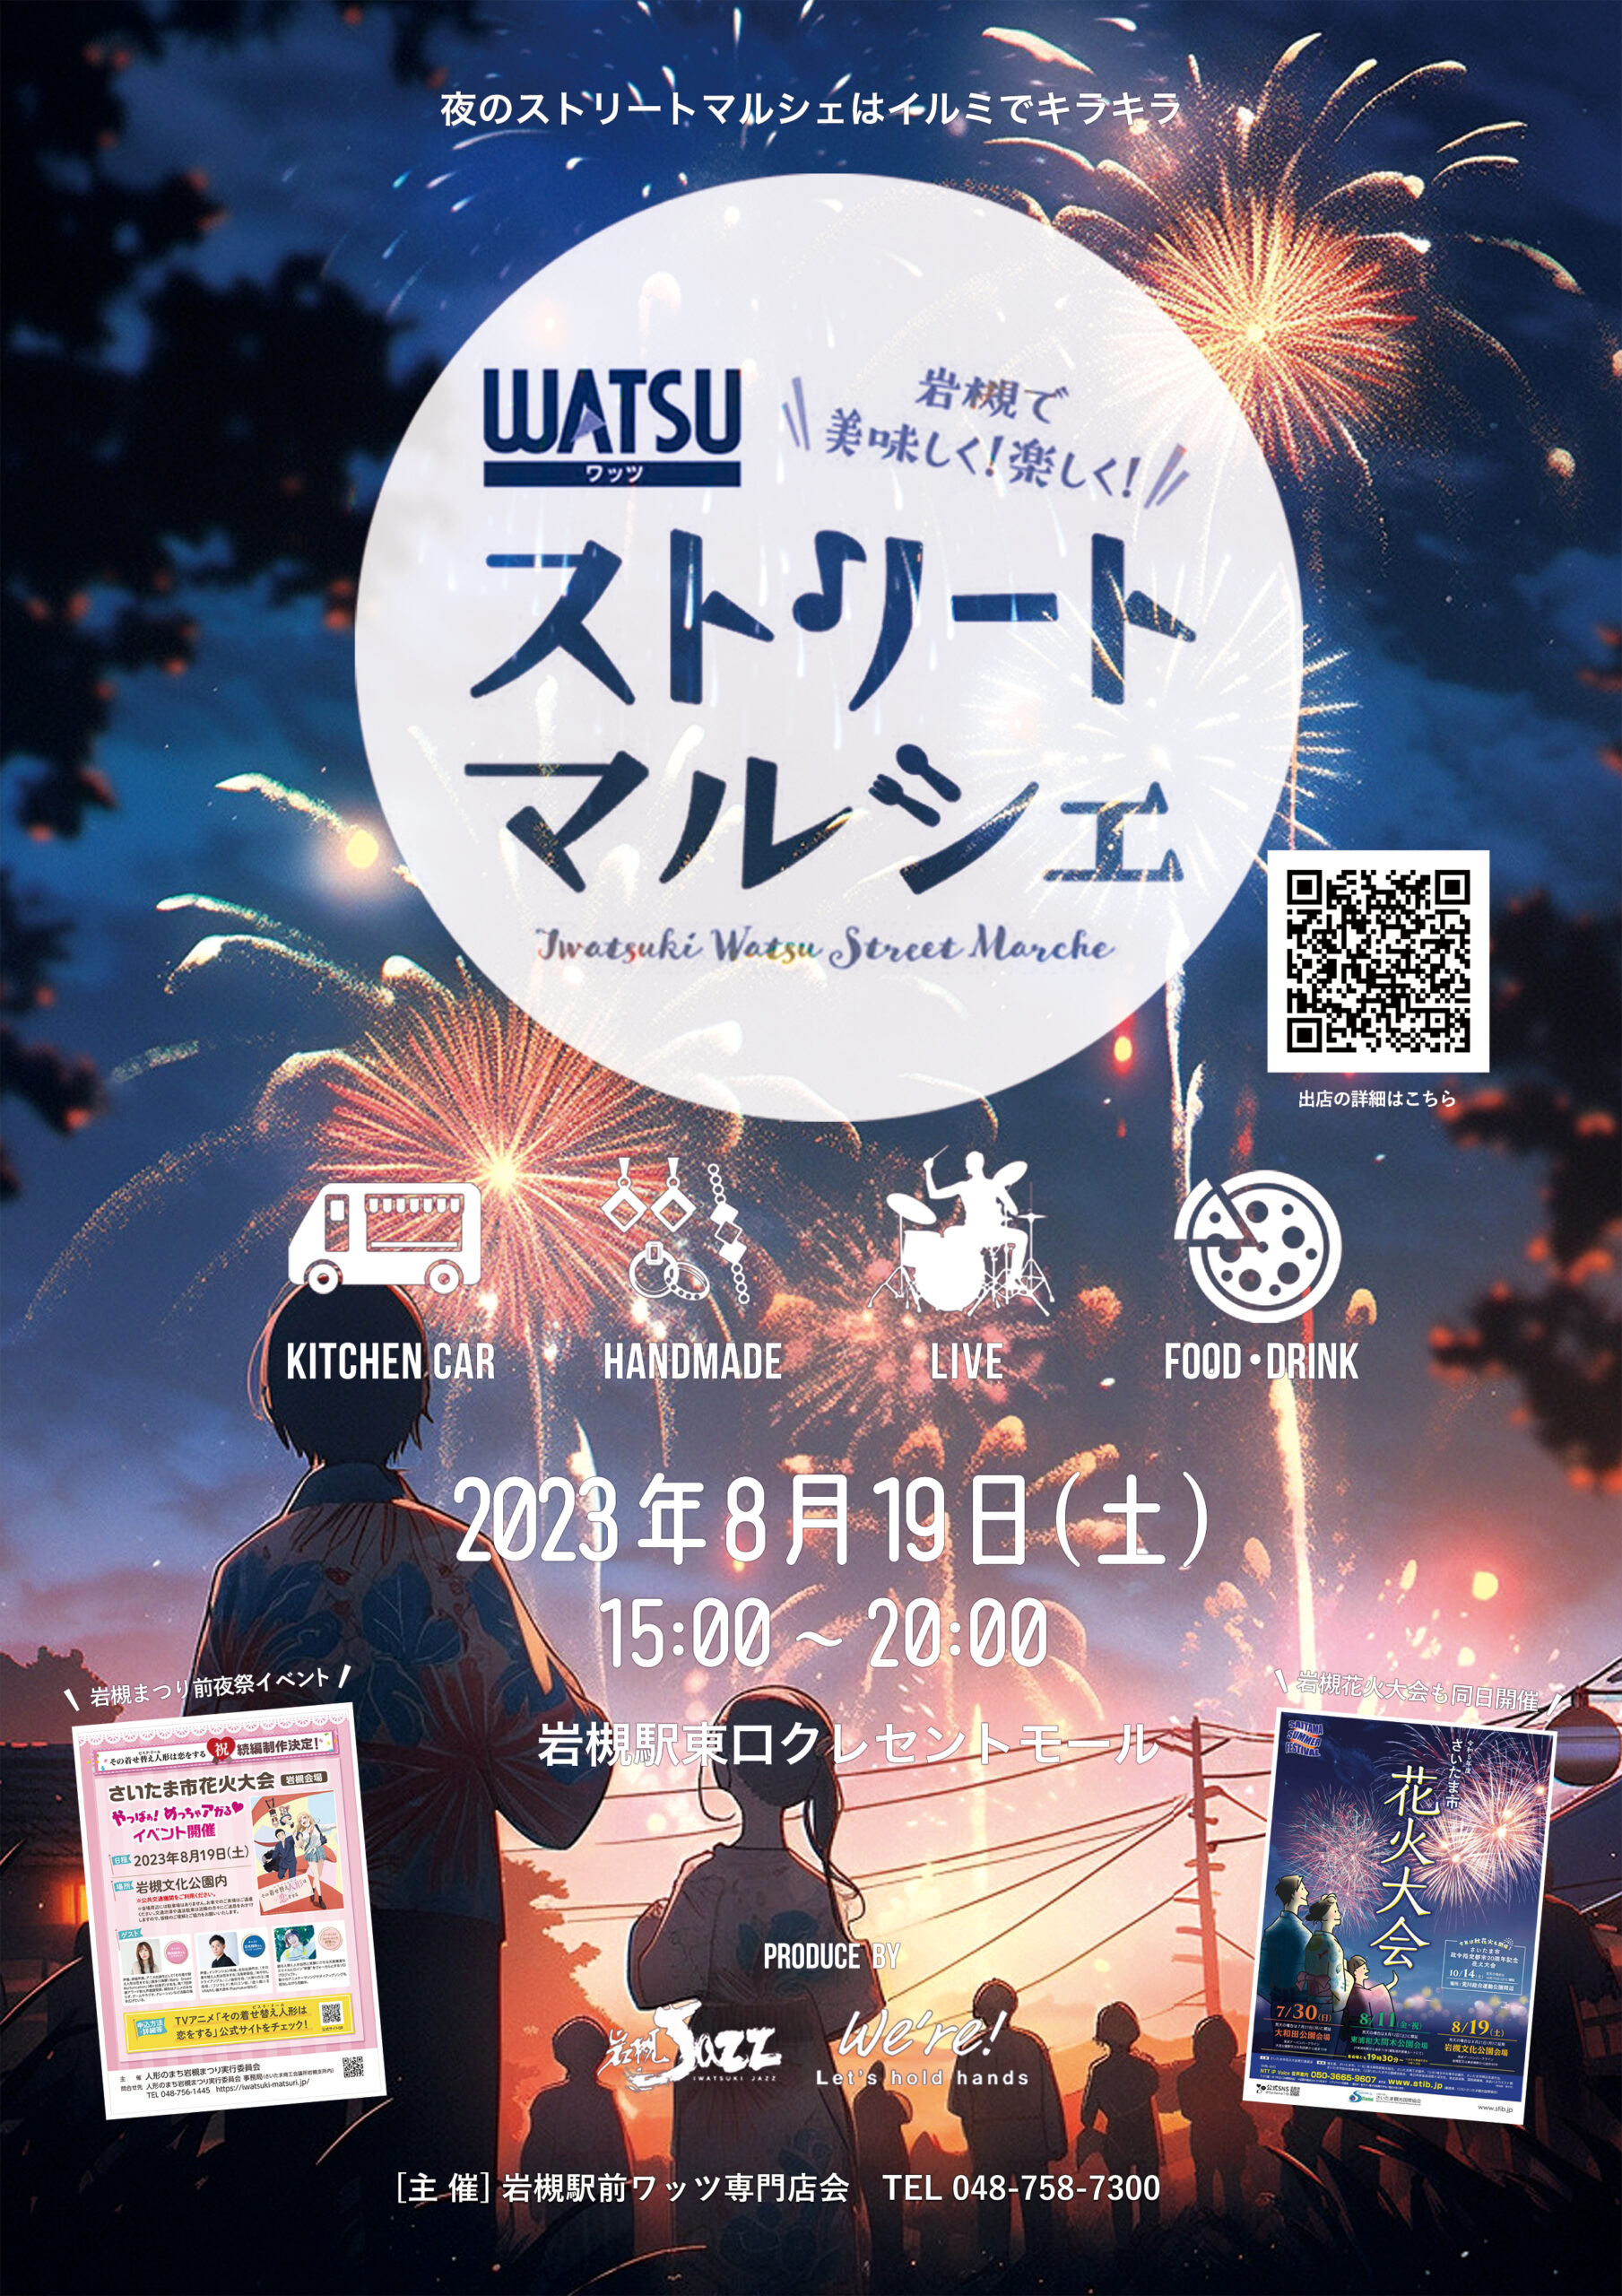 WATSU ストリートマルシェ-2023.8.19 Sat＠produce by 岩槻Jazz＆We're!